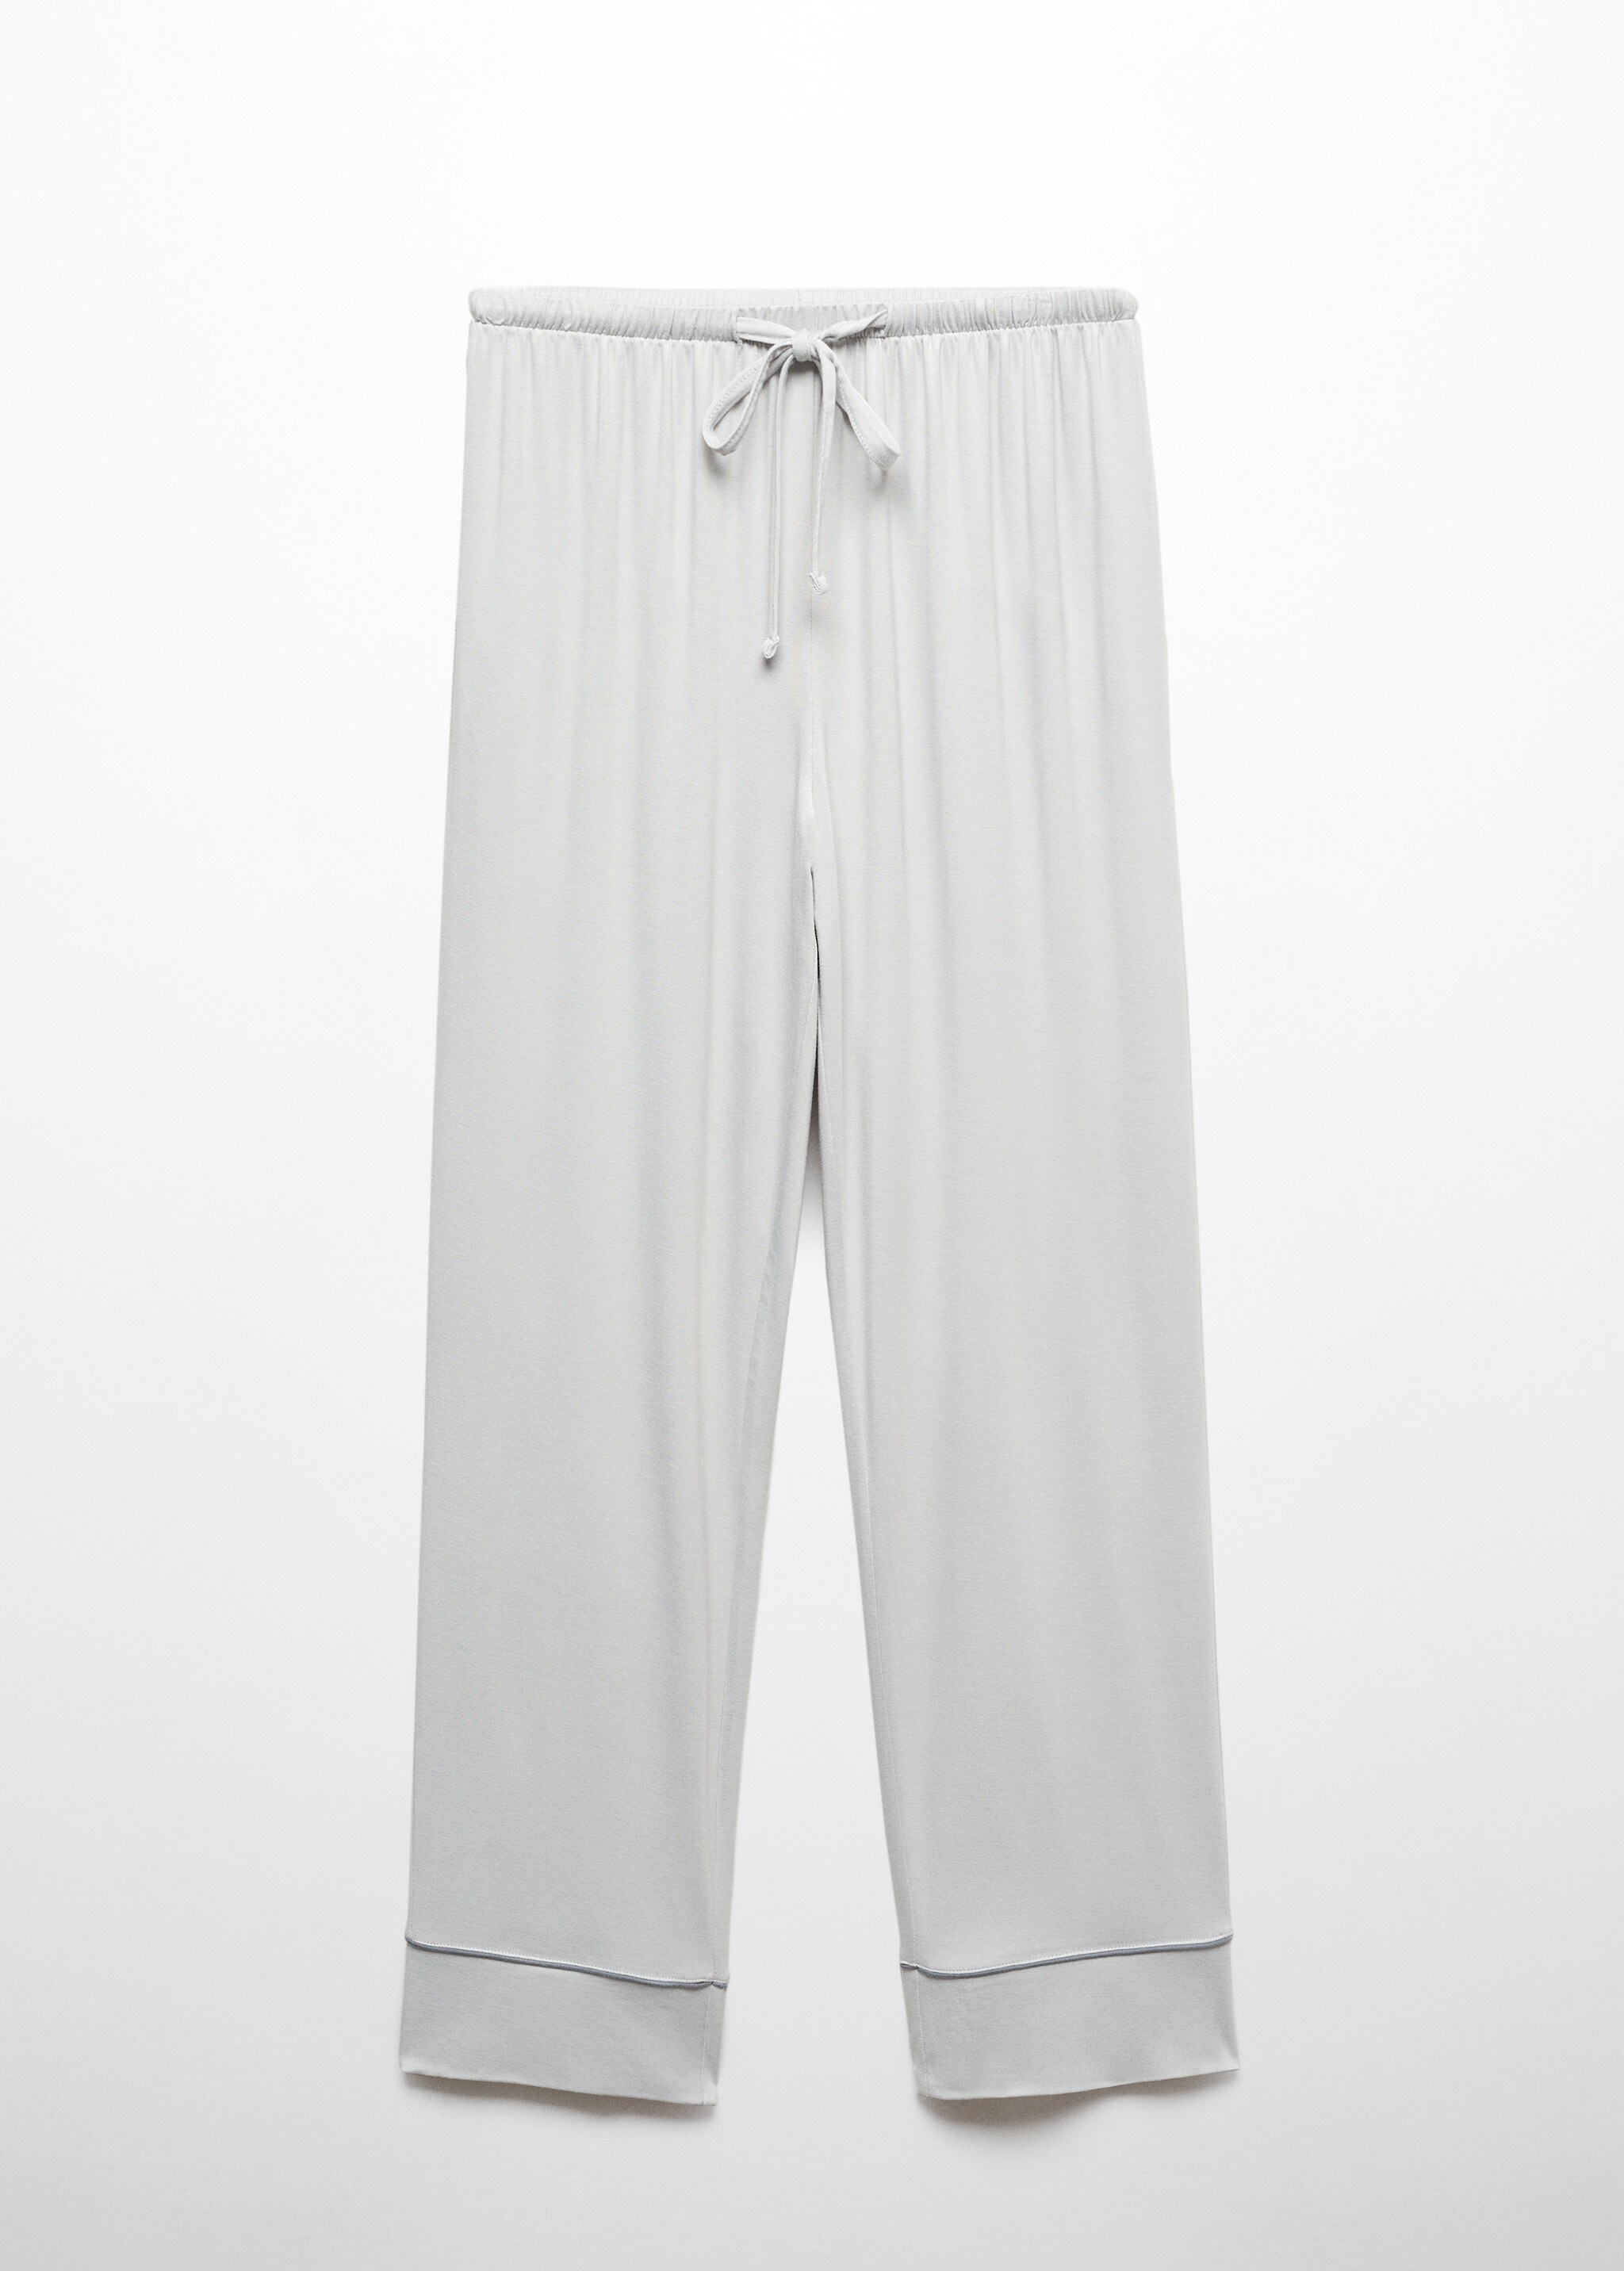 Fitilli pijama pantolonu - Modelsiz ürün